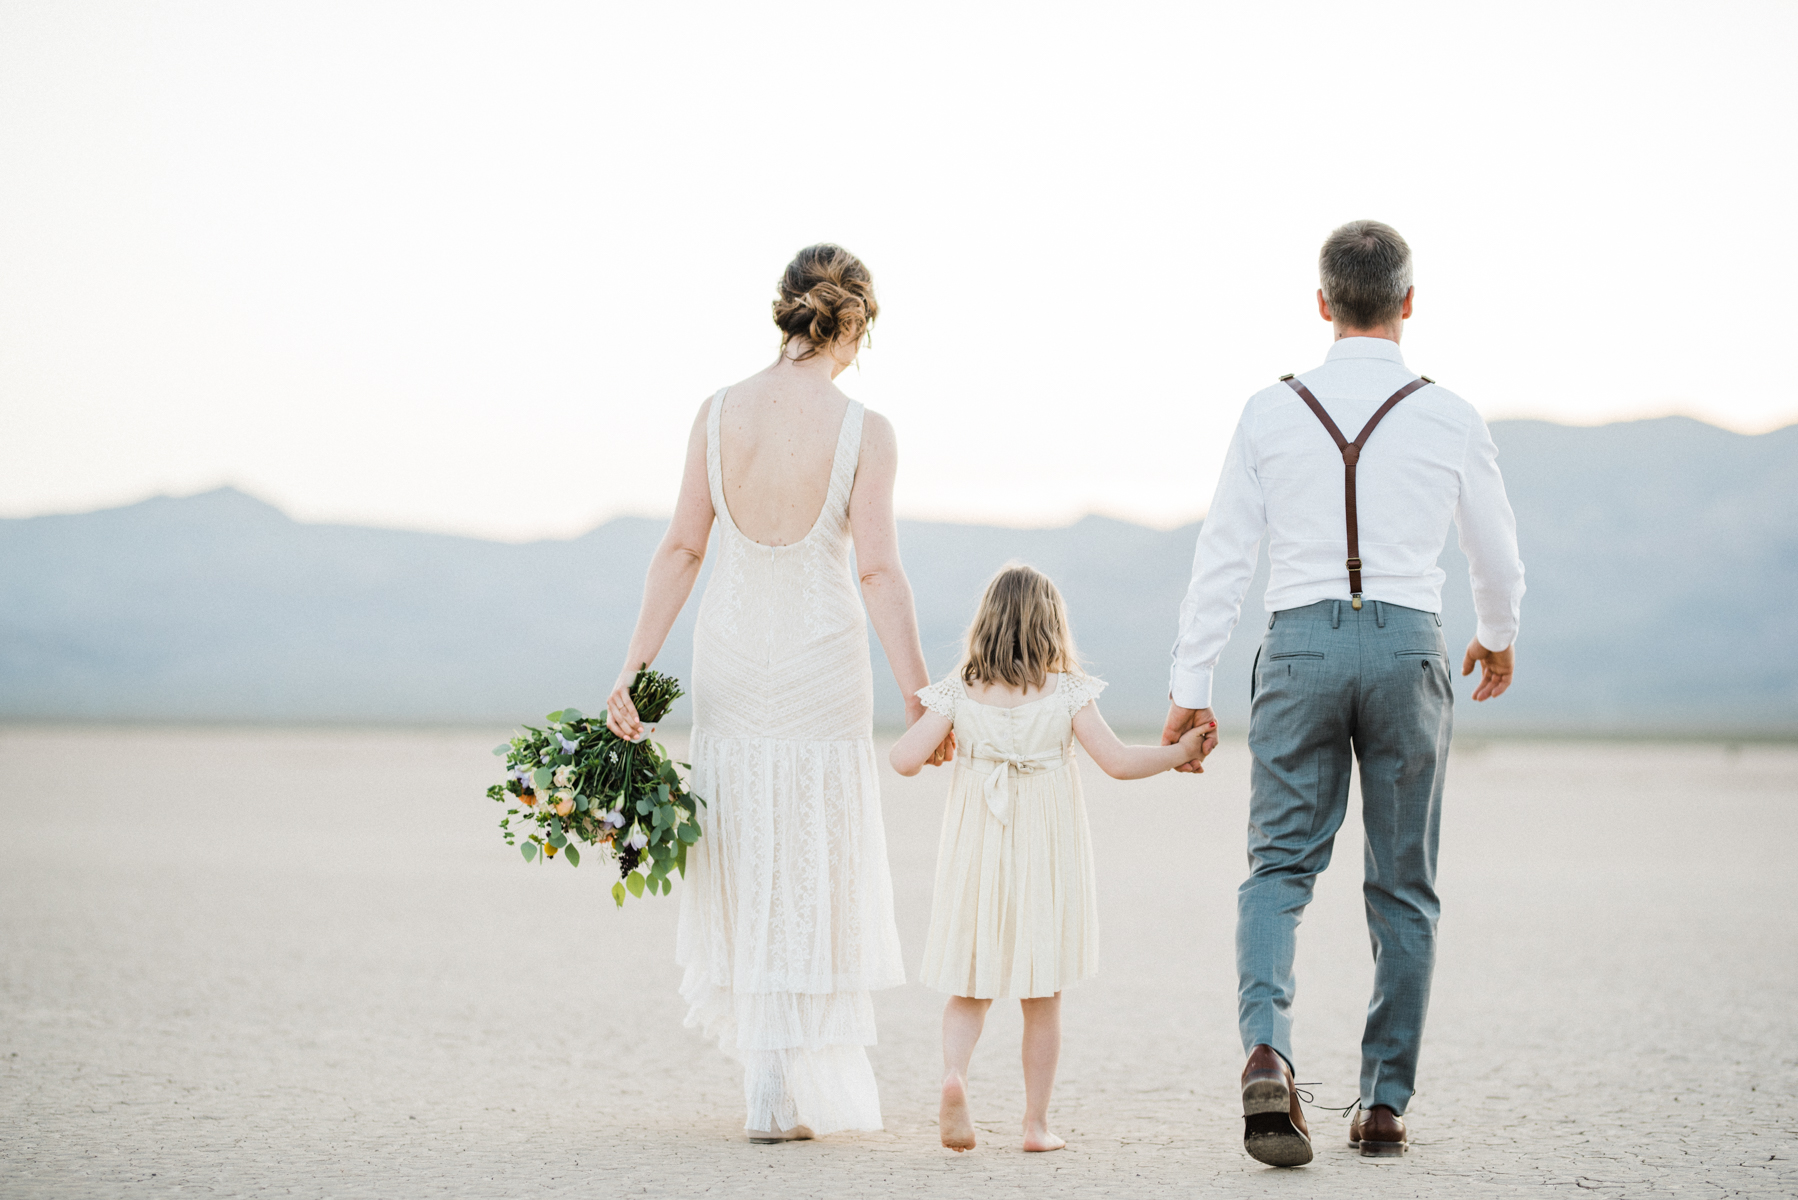 A Las Vegas Desert Elopement - Kristen Kay Photography -- Wedding Blog - The Overwhelmed Bride